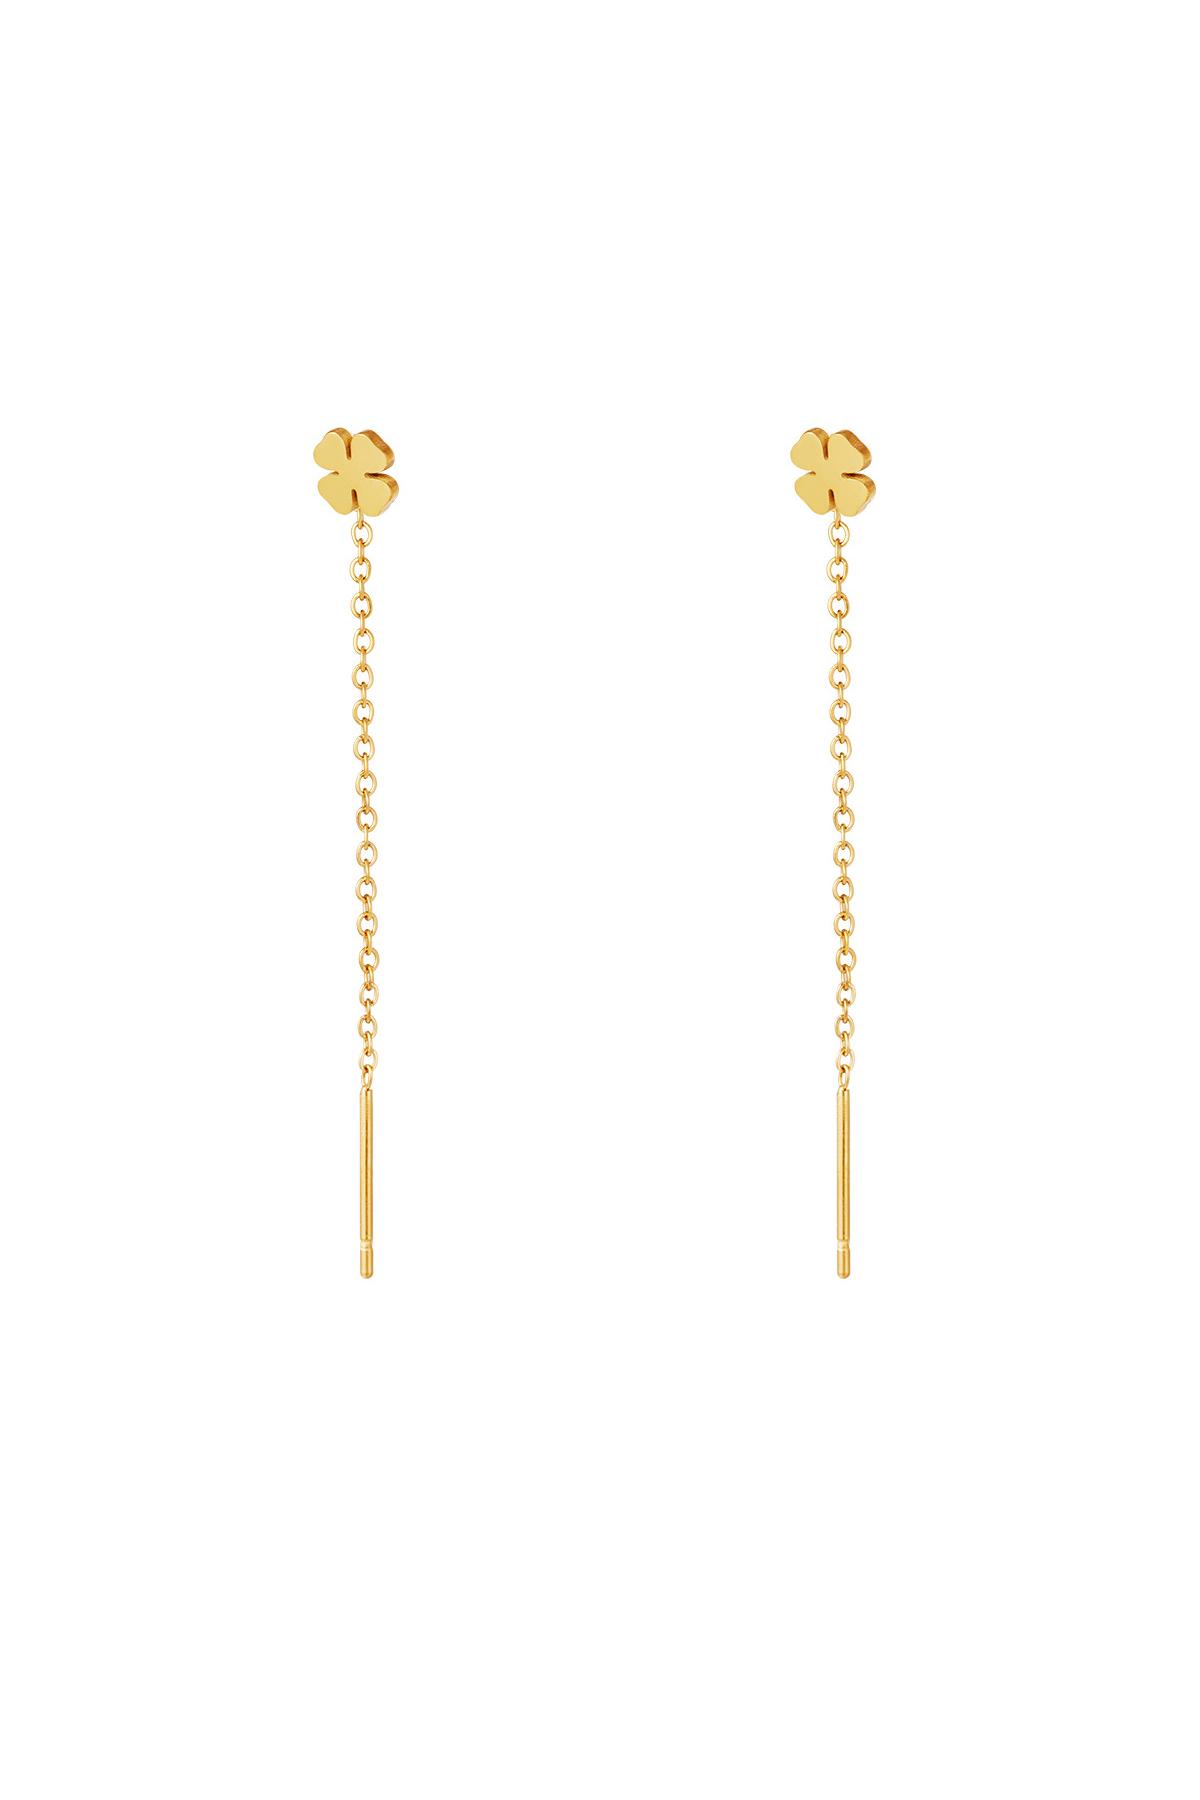 Stainless Steel Chain Earrings Clover Gold 